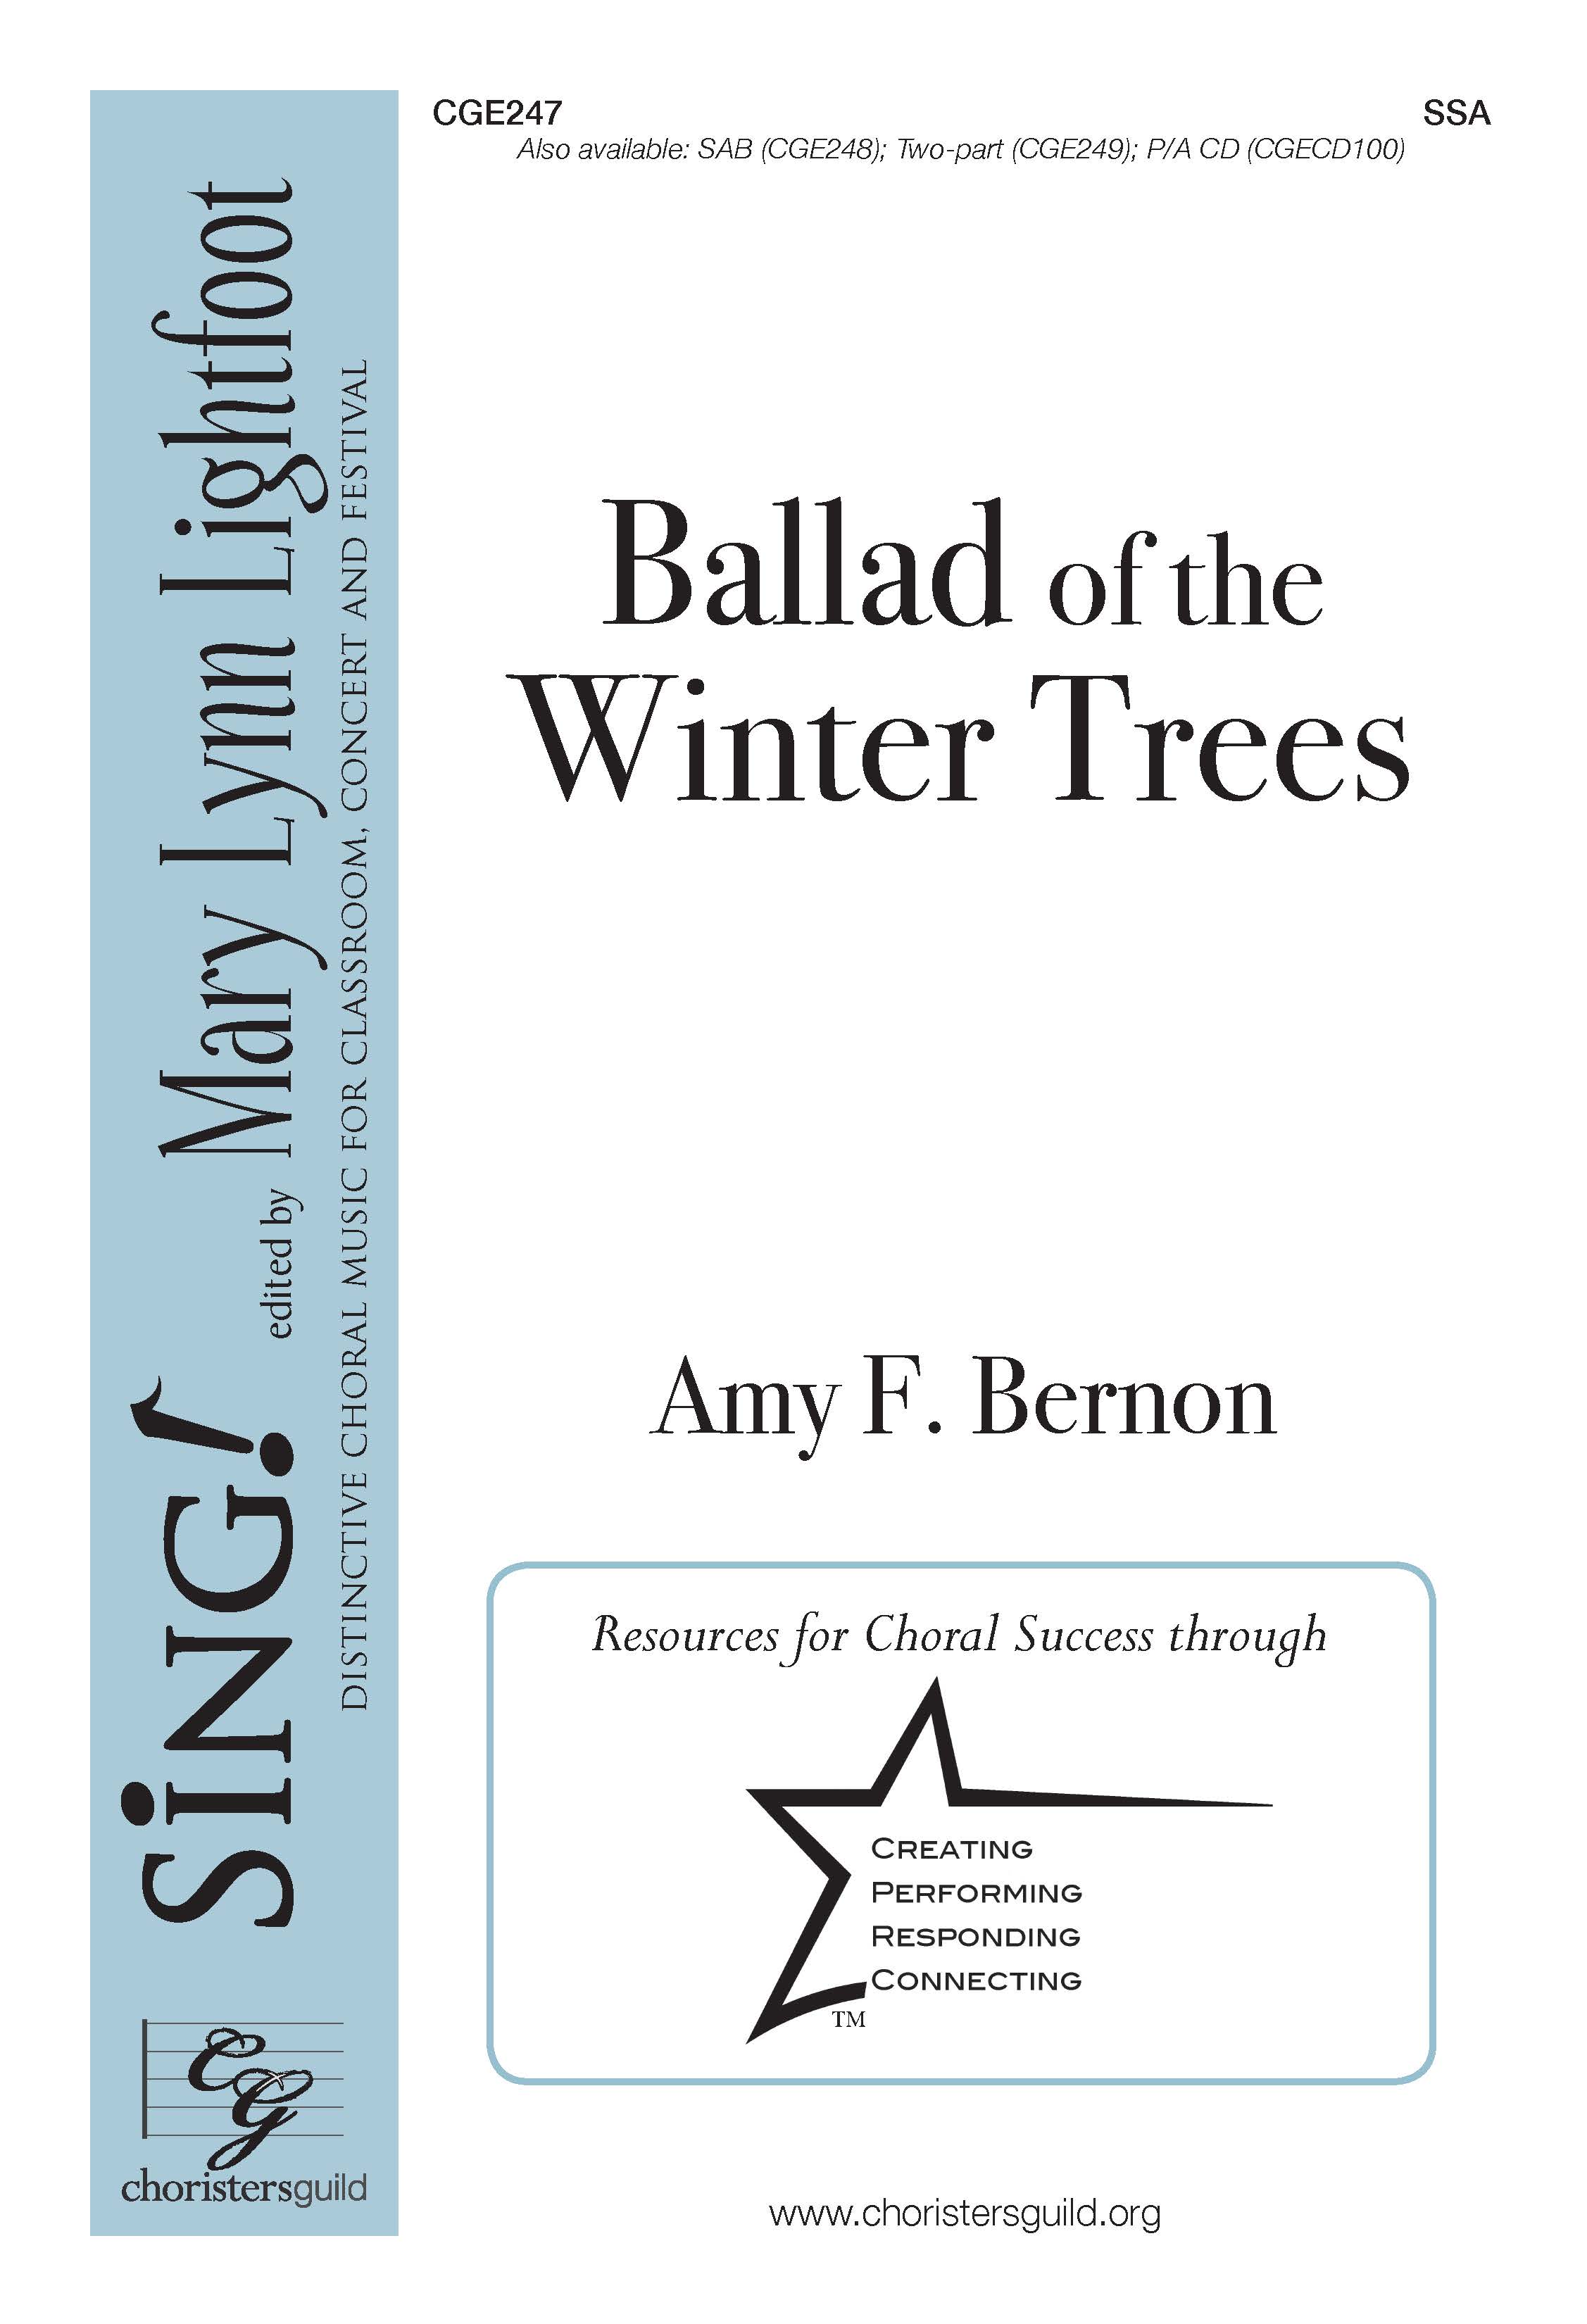 Ballad of the Winter Trees SSA